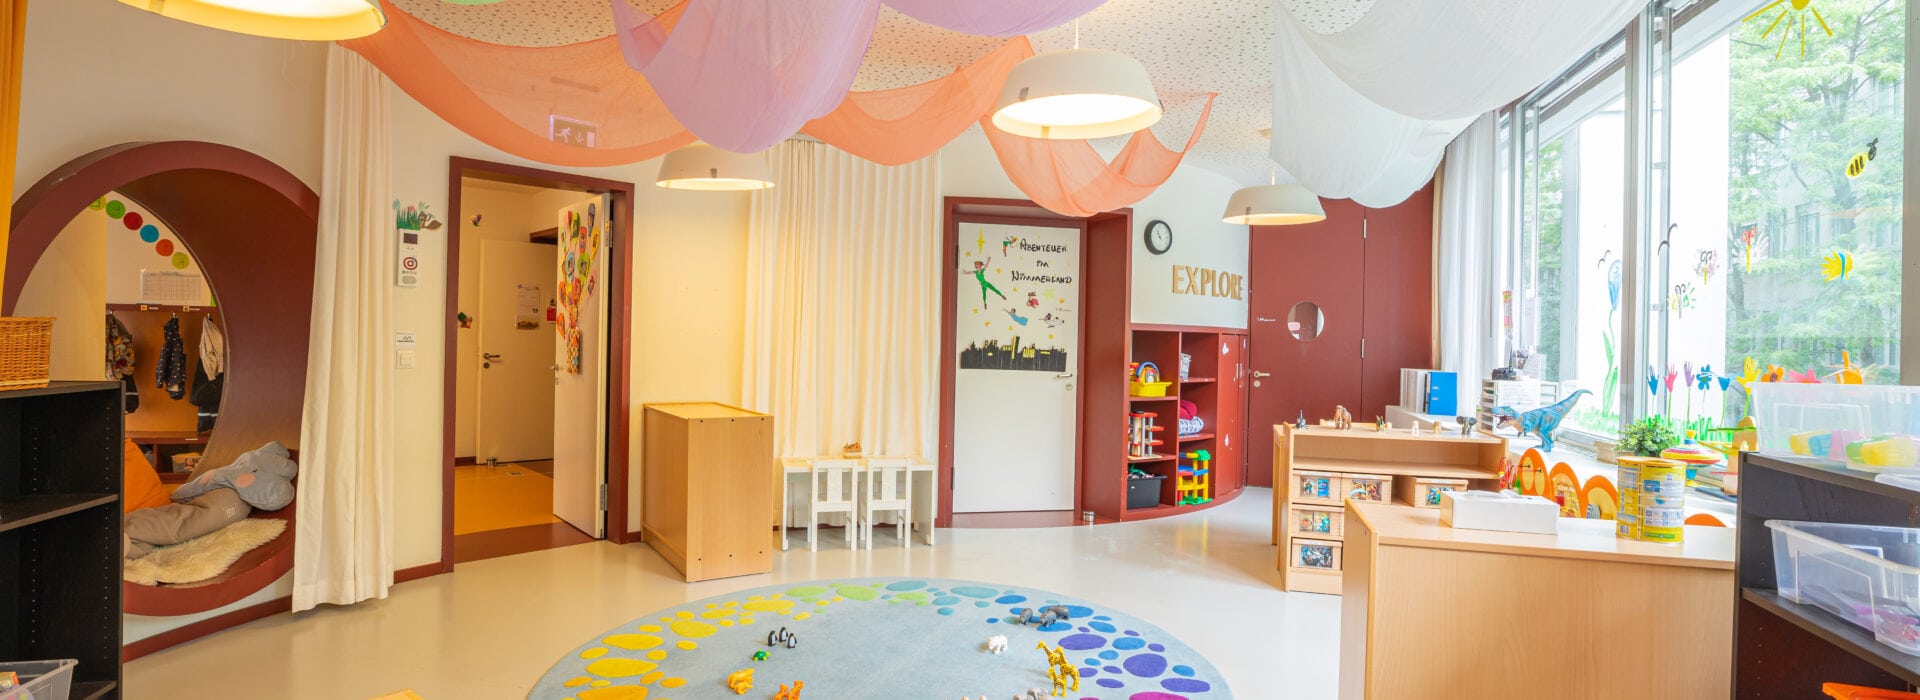 Daycare center Novartis Lichtstrasse